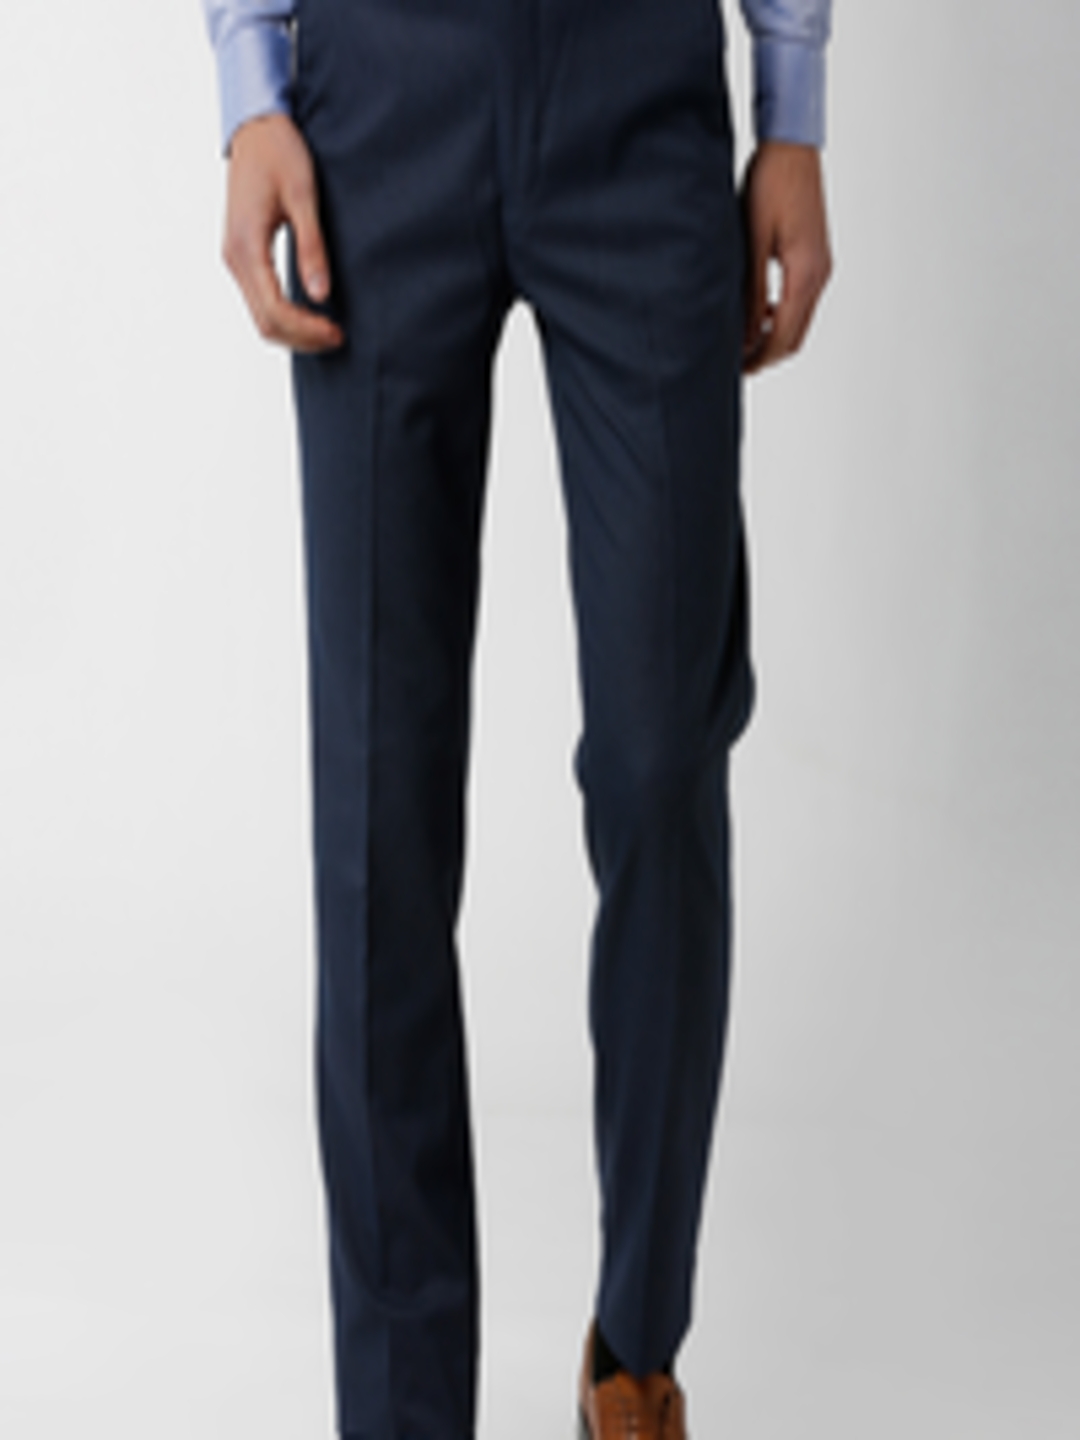 Buy Peter England Men Navy Blue Slim Fit Solid Formal Trousers ...